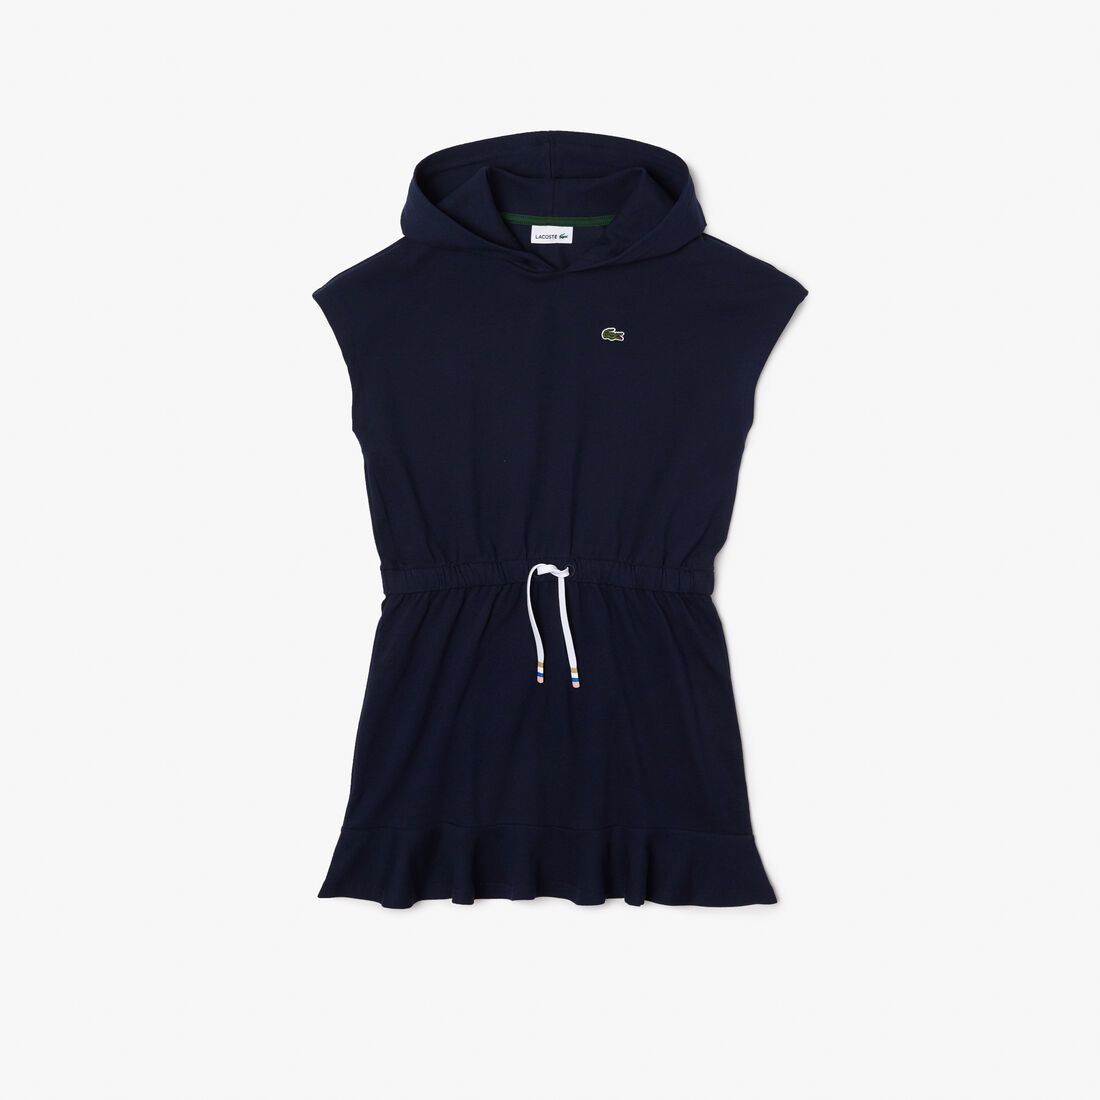 Girls’ Lacoste Stretch Piqué Sleeveless Sweater Dress